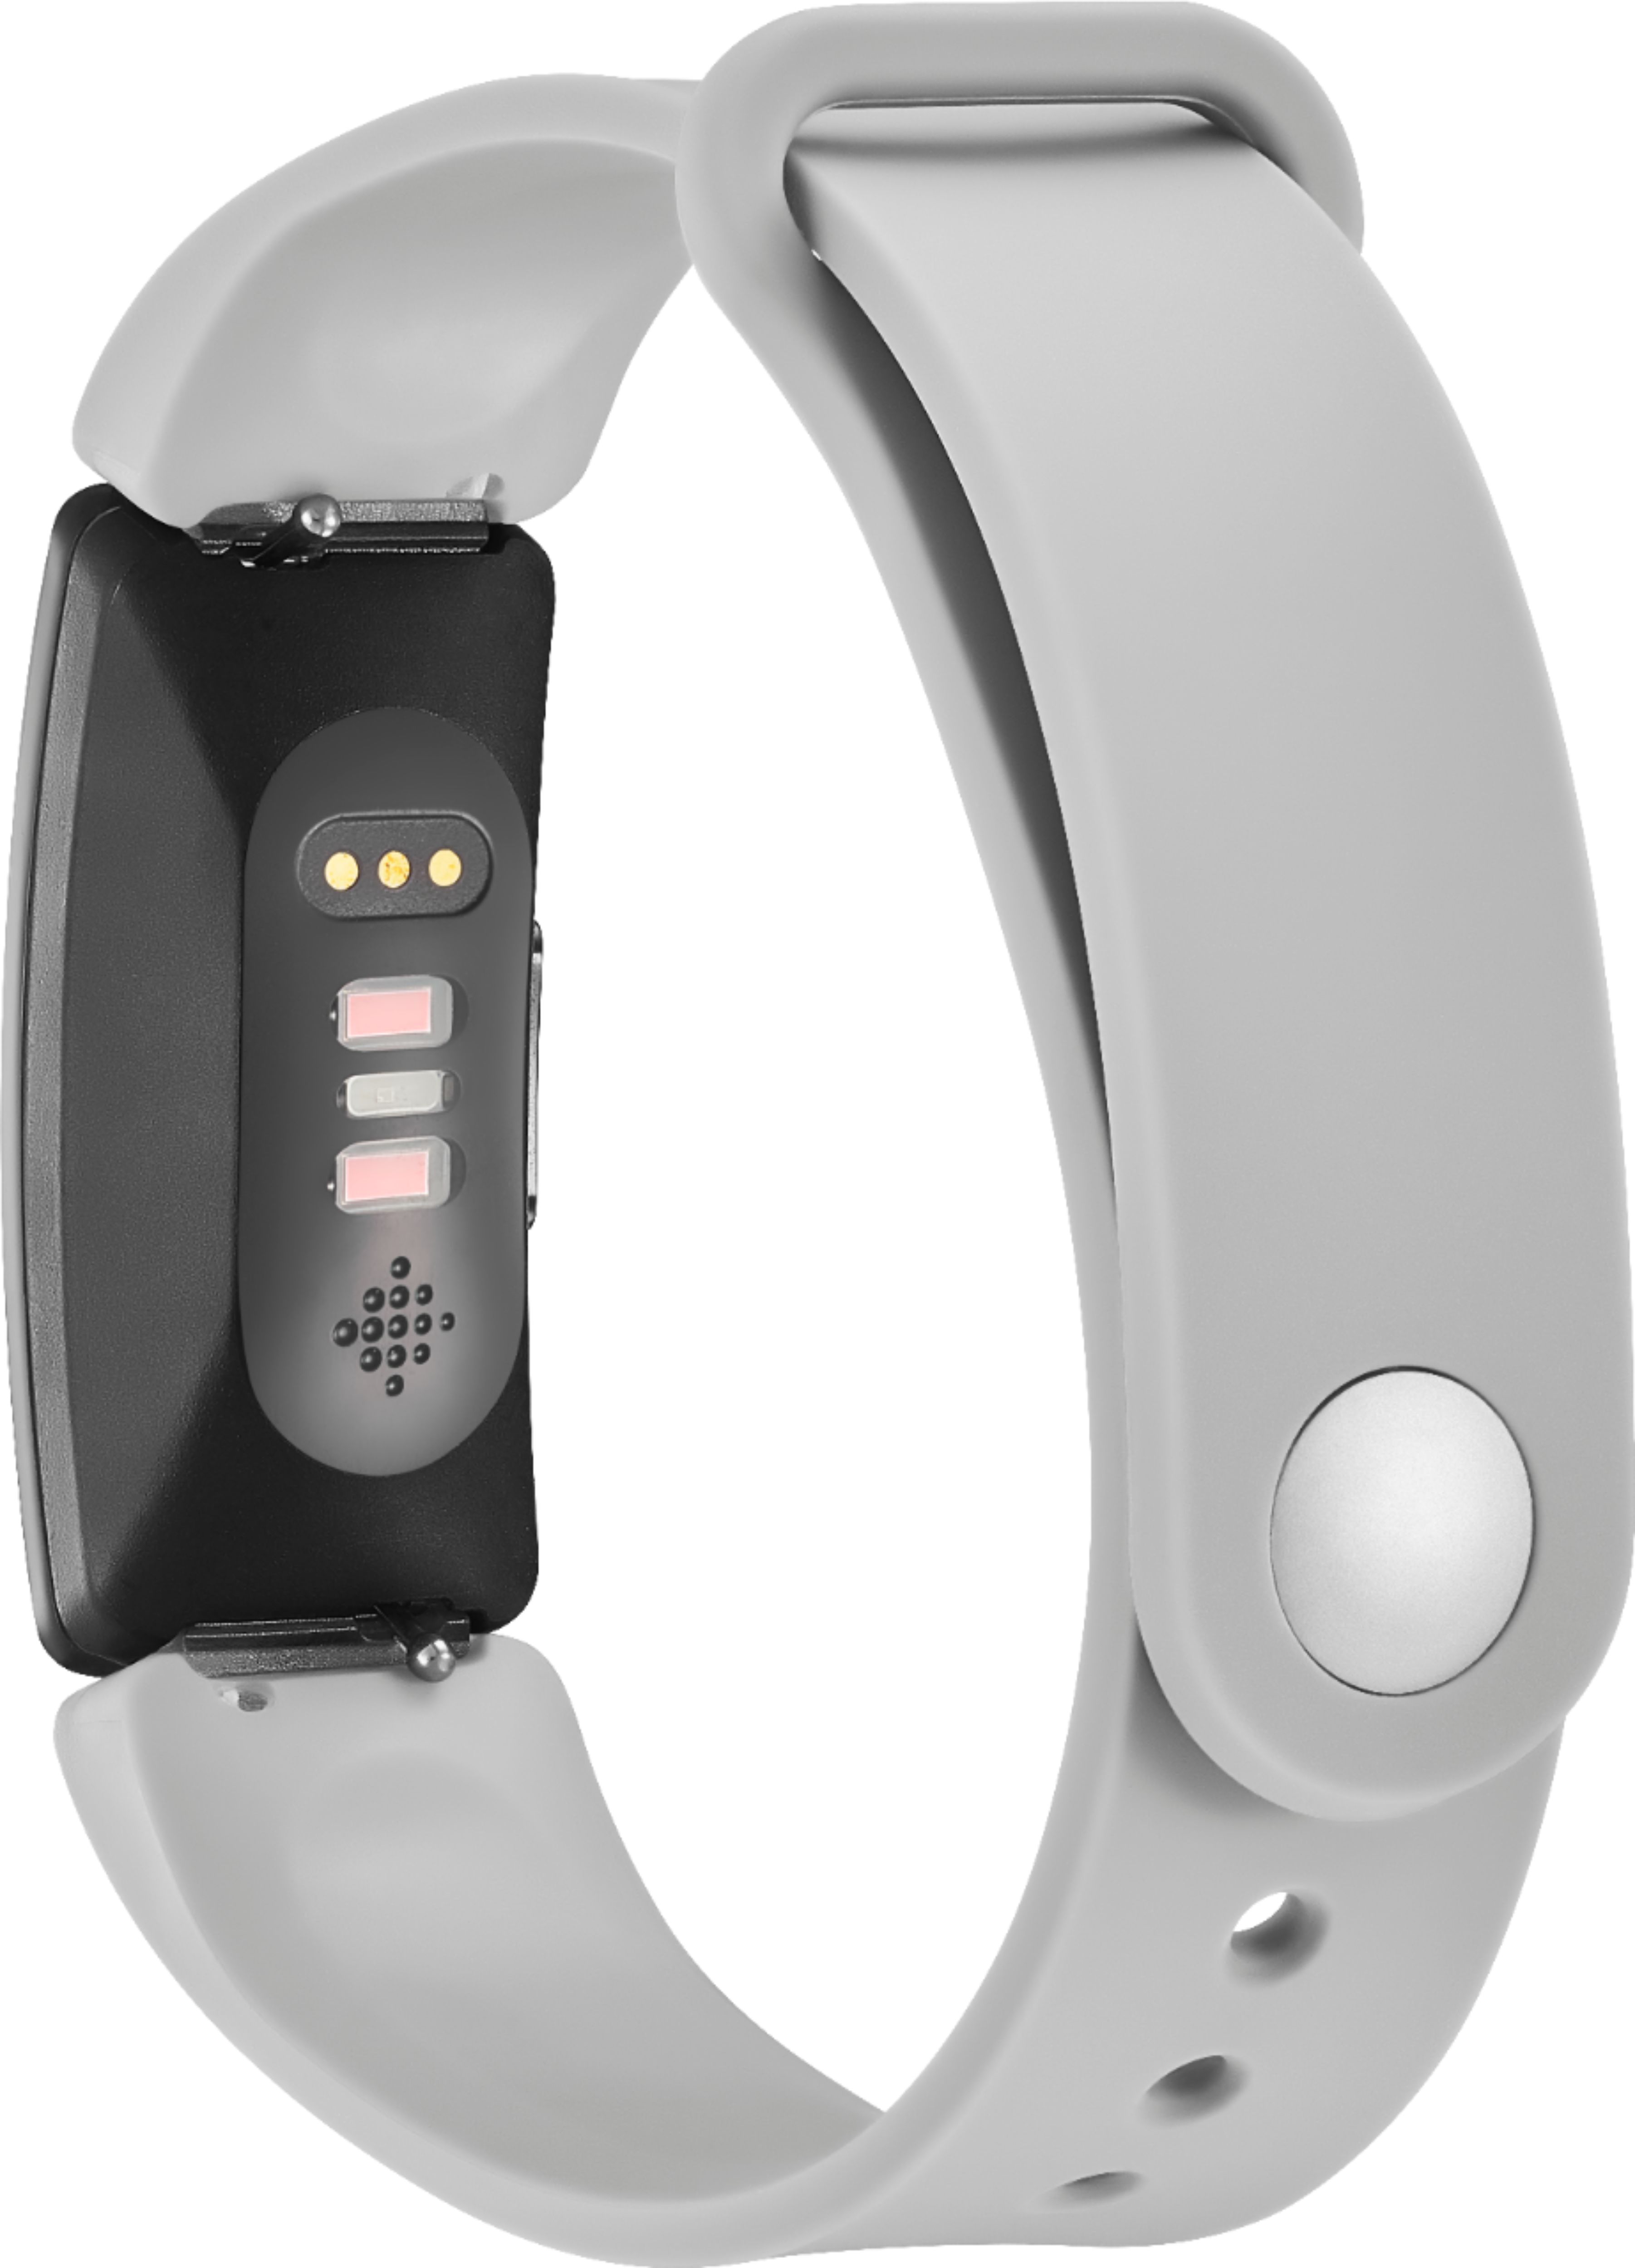 Case Schutzhülle Schutzhülle Silicon Shell Smart Band For Fitbit Inspire & HR 